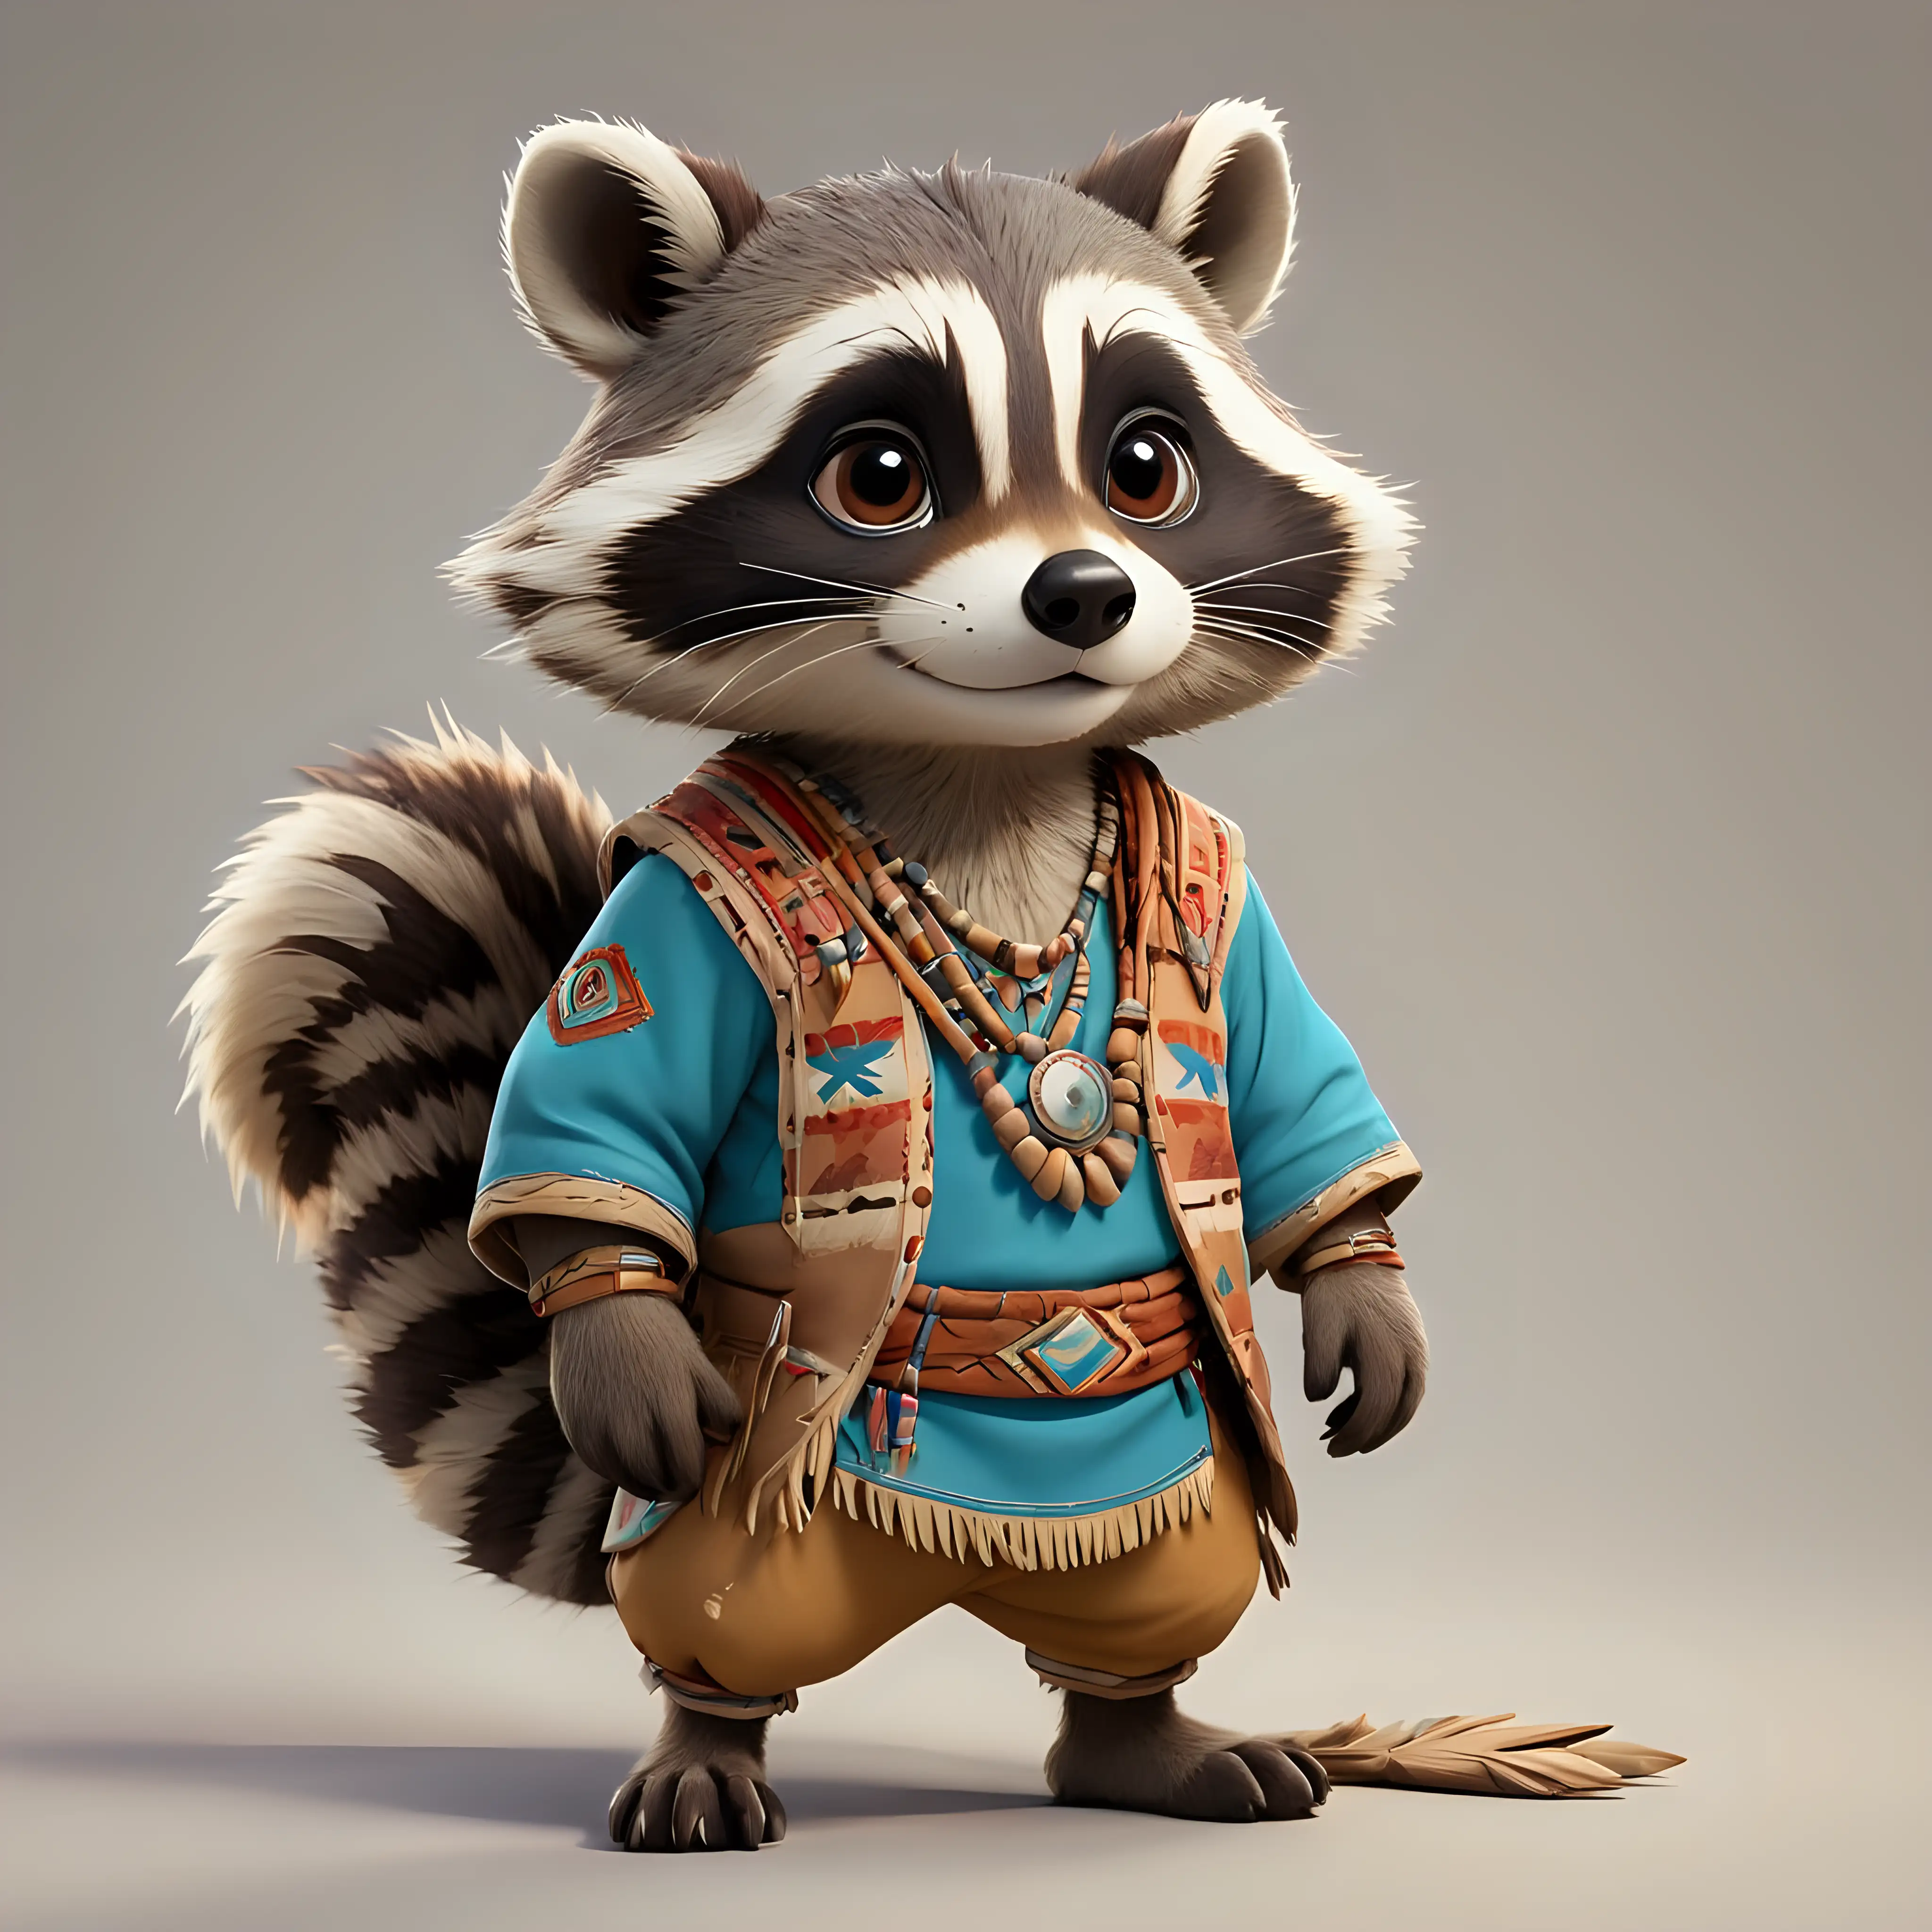 Adorable Cartoon Raccoon Wearing American Indian Attire